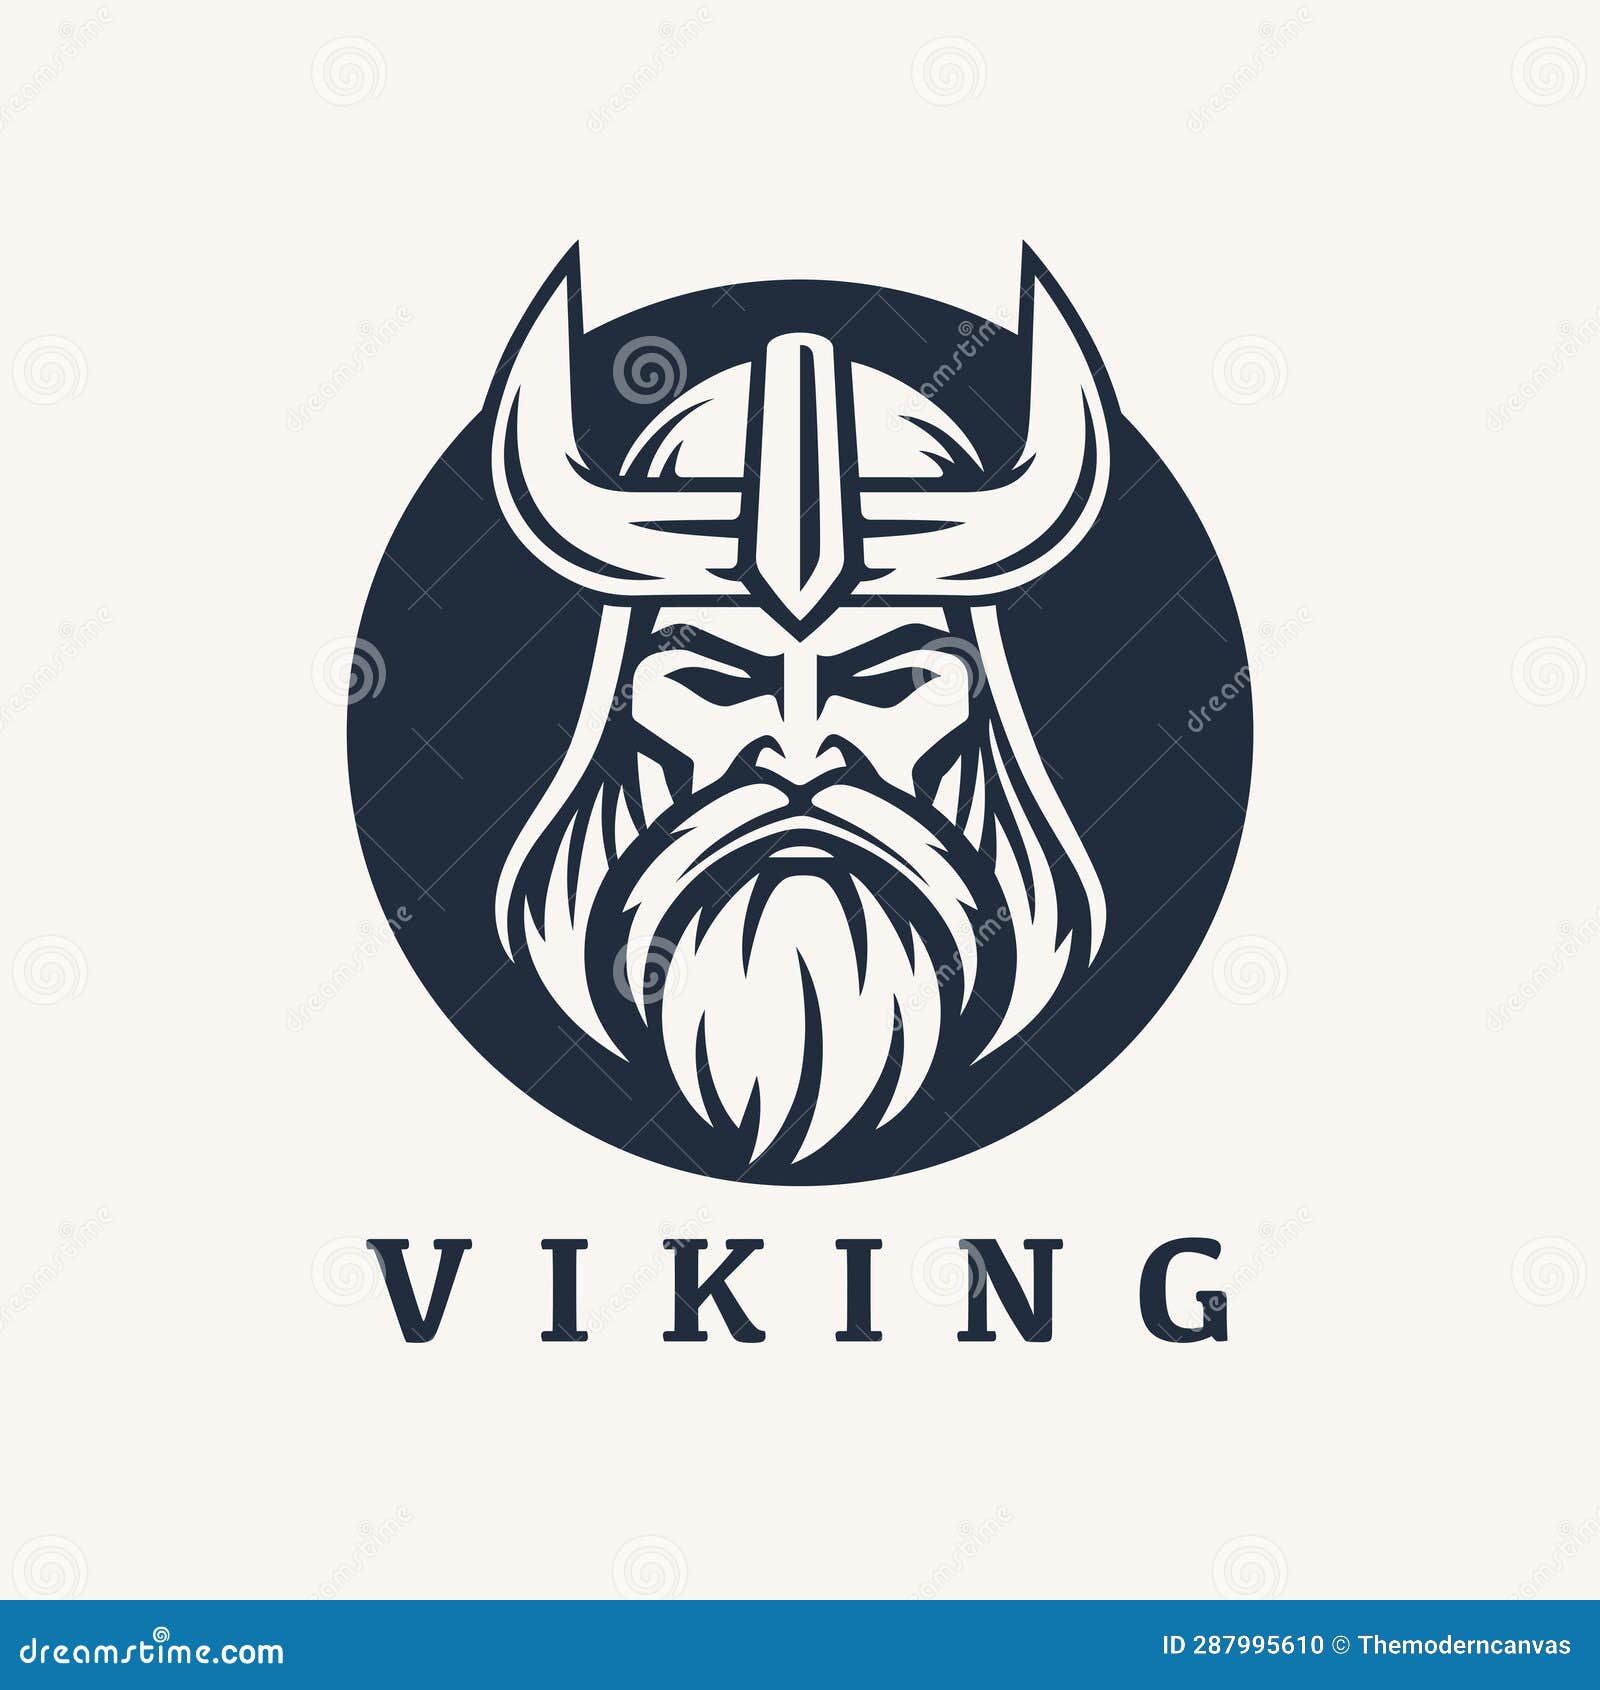 Nordic viking logo icon stock illustration. Illustration of bold ...